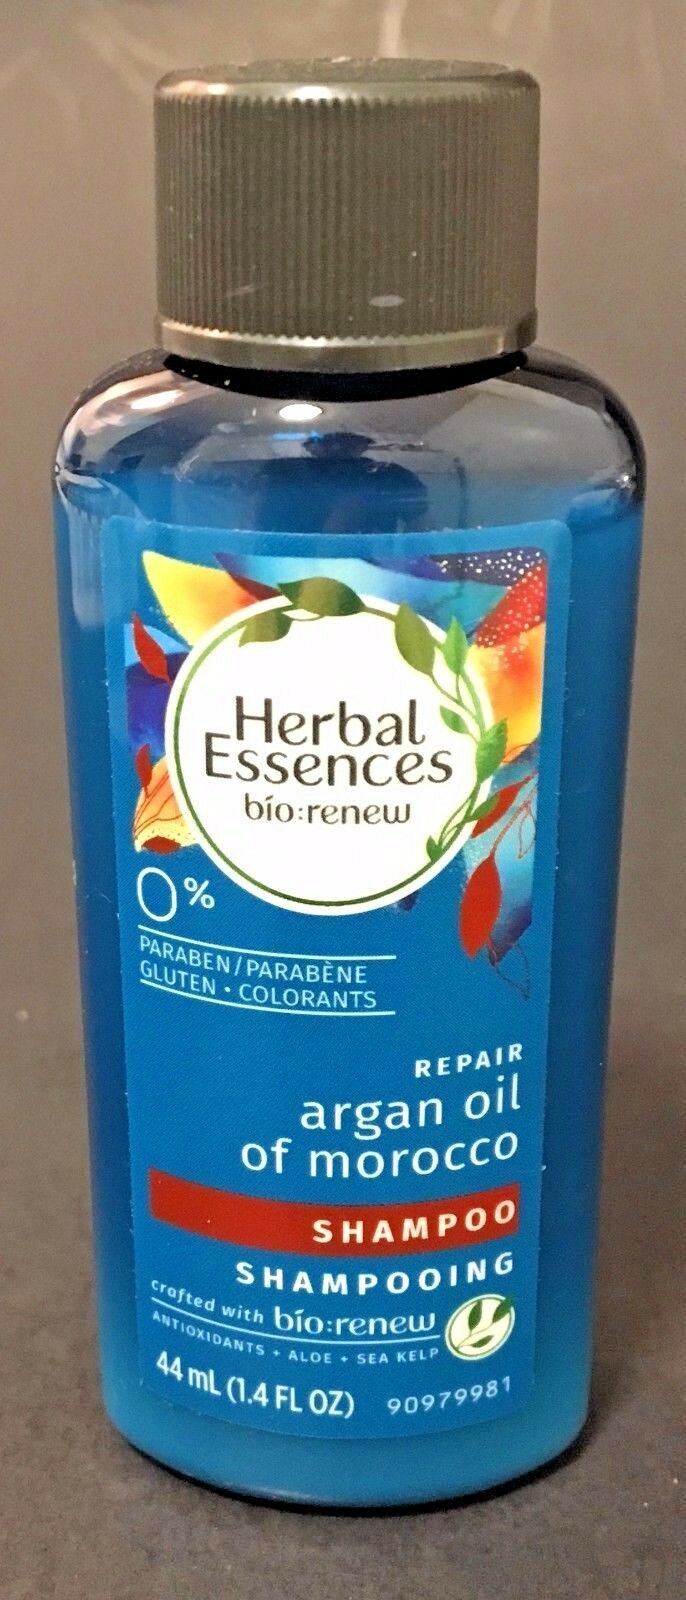 Herbal Essences Bio Renew ARGAN OIL OF MOROCCO Shampoo 1.4 fl oz 44 ml Travel - Perfume Gallery